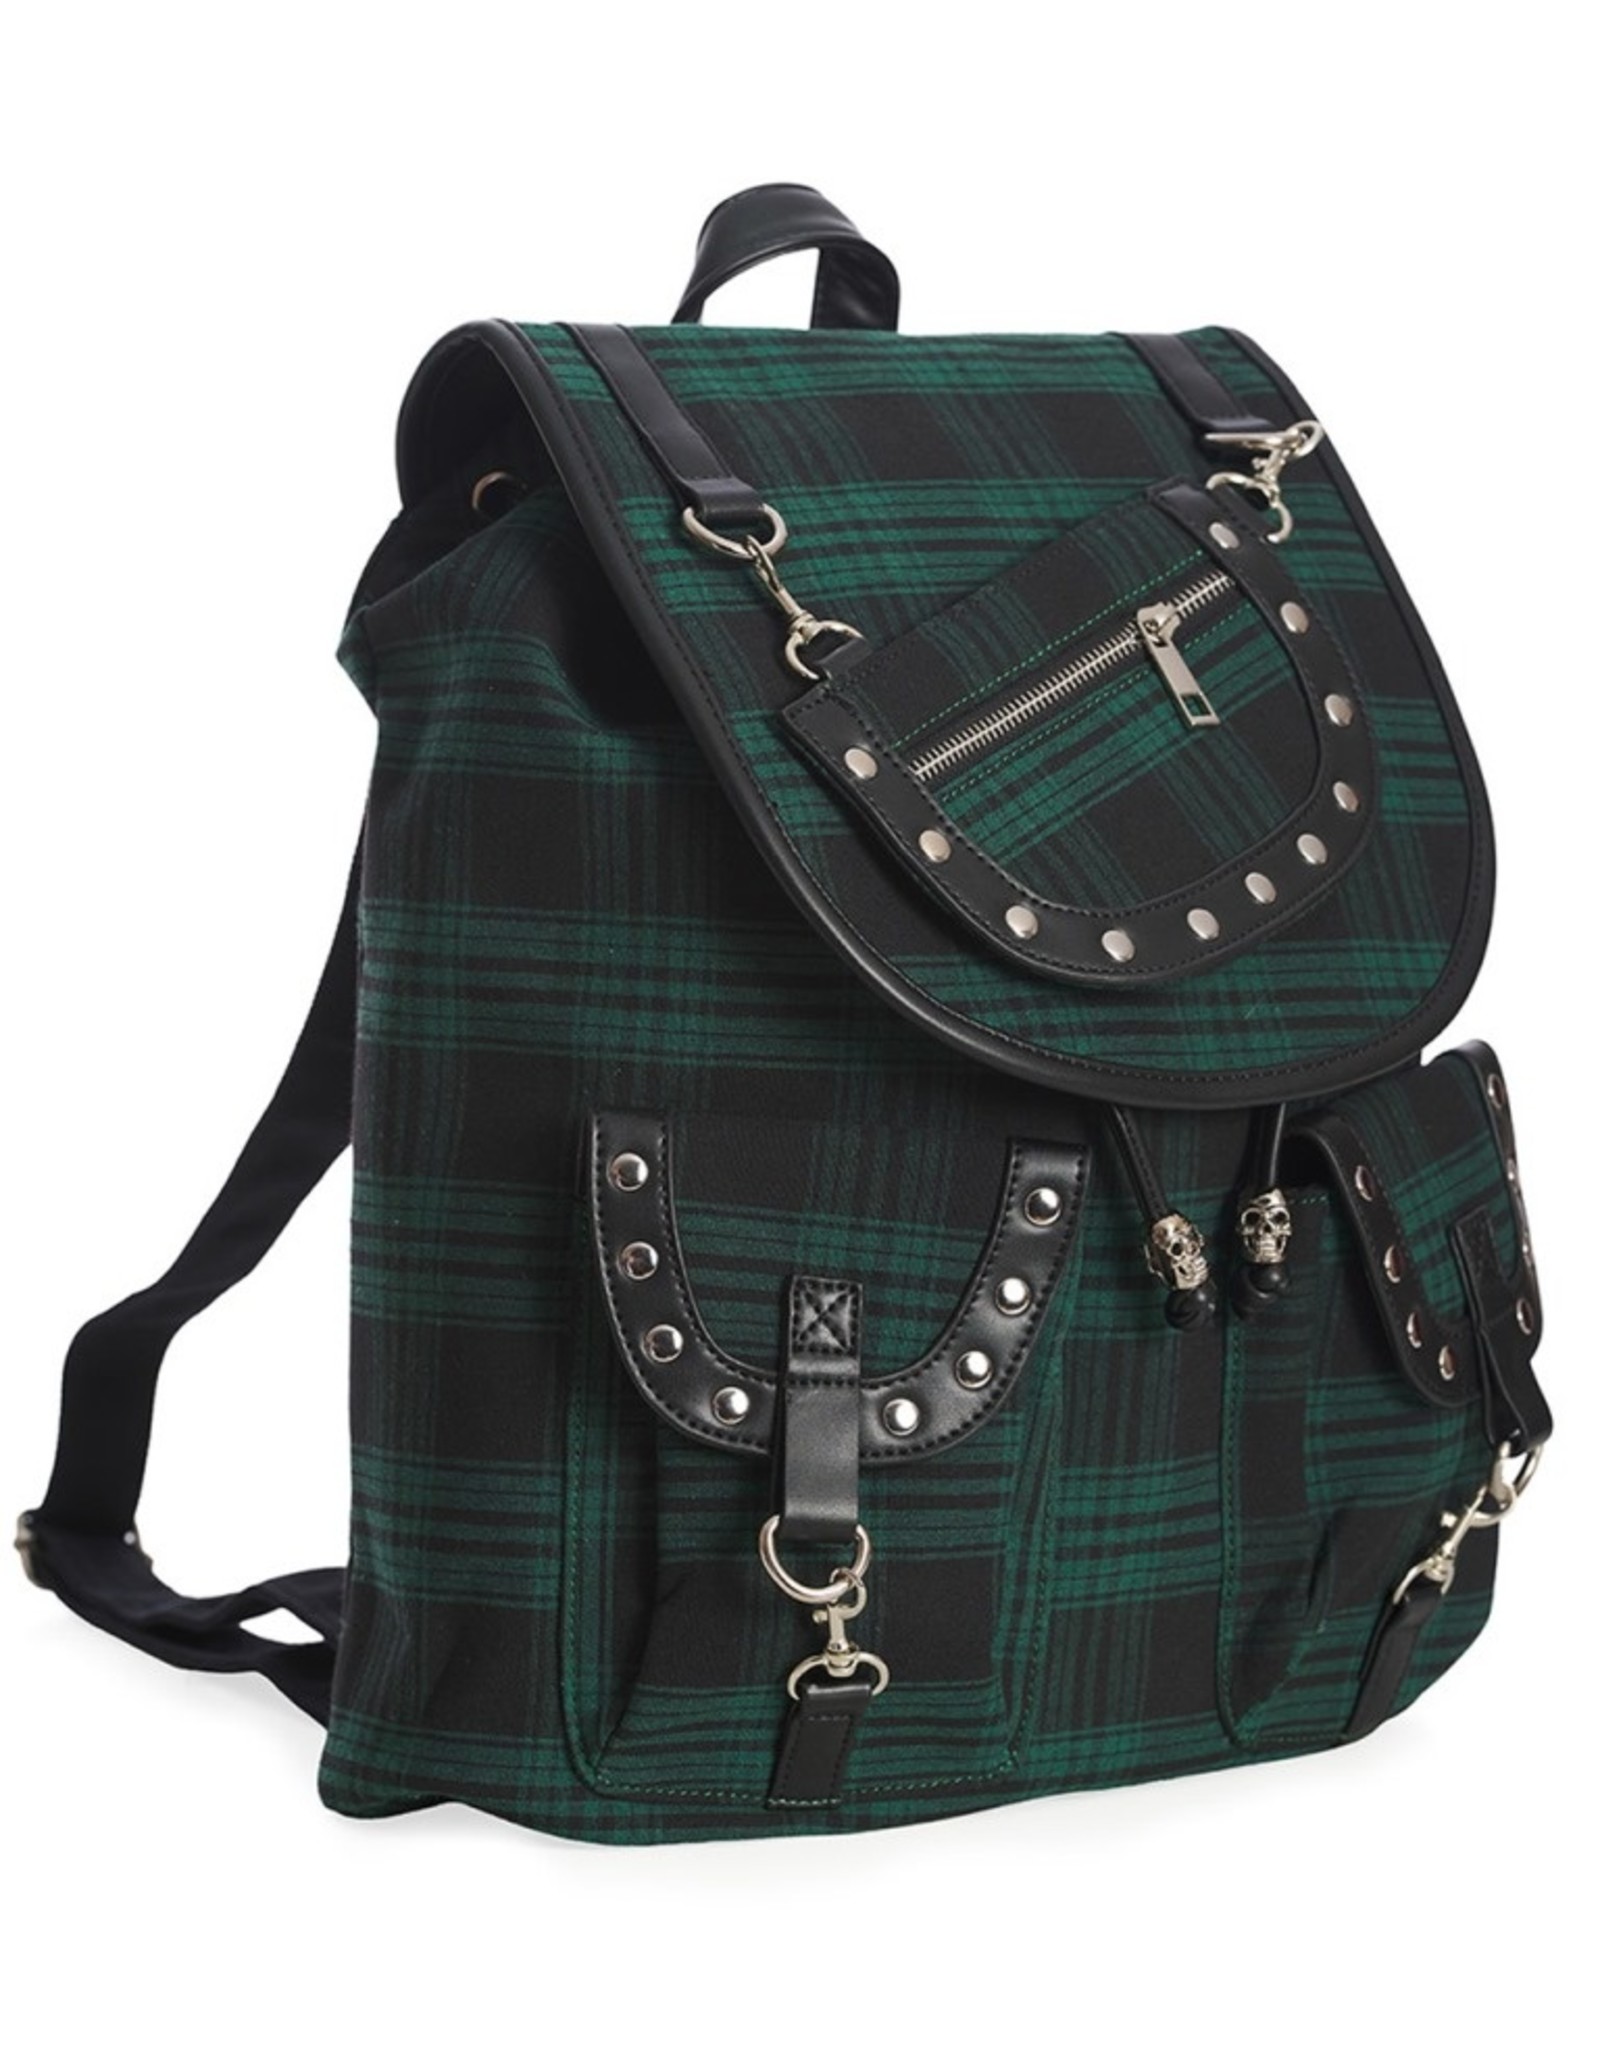 Banned Backpacks - Banned  Yamy Tartan backpack green-black